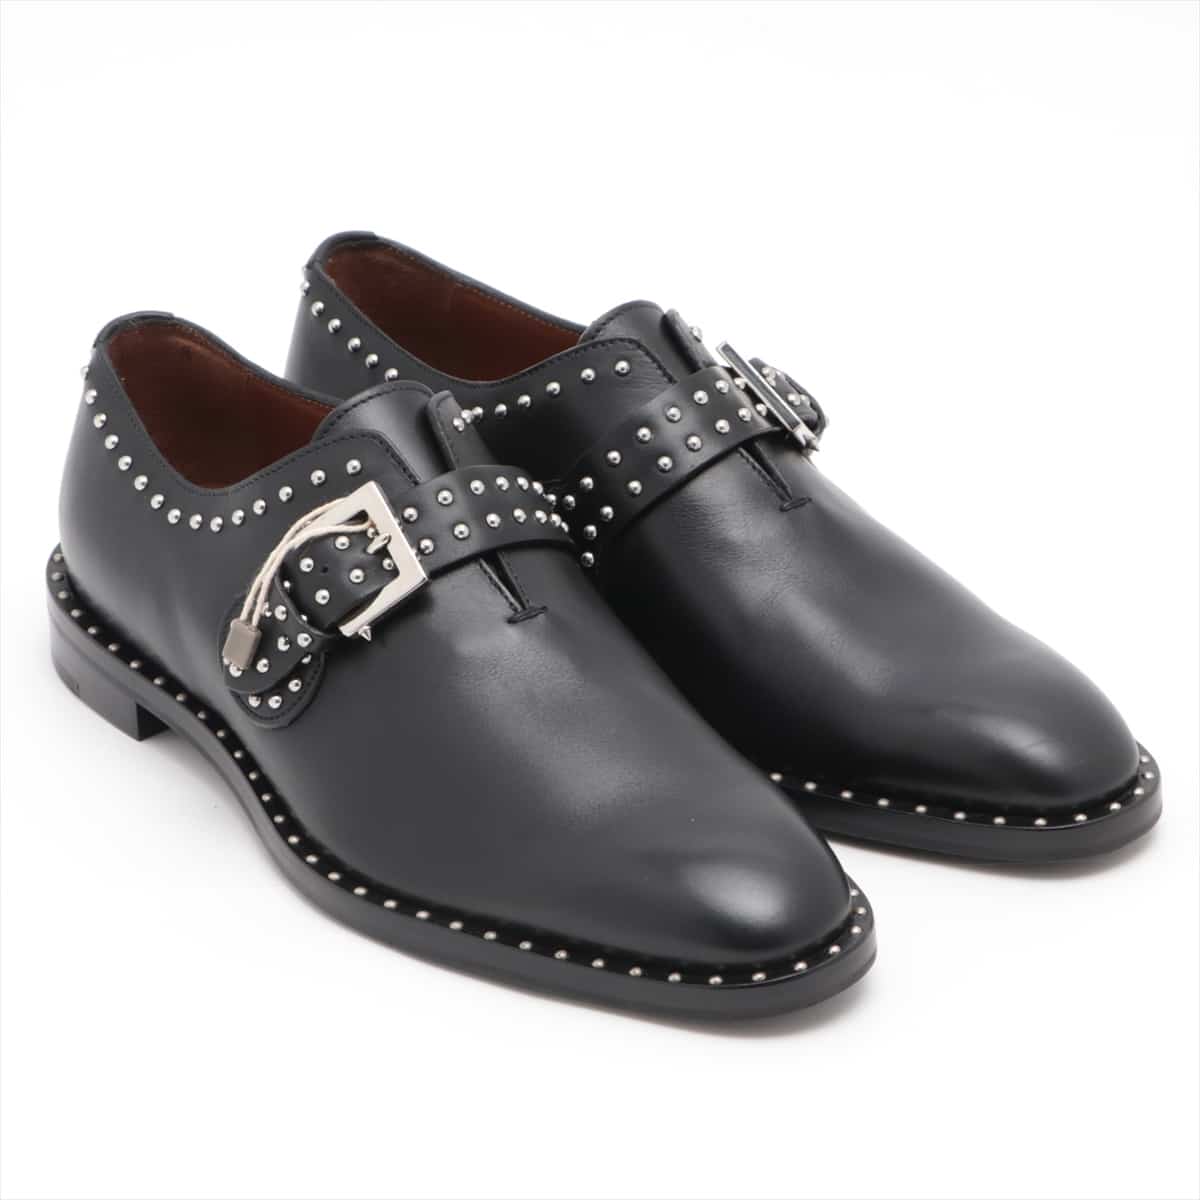 Givenchy Leather Dress shoes 40 Unisex Black Monkstraps Studs